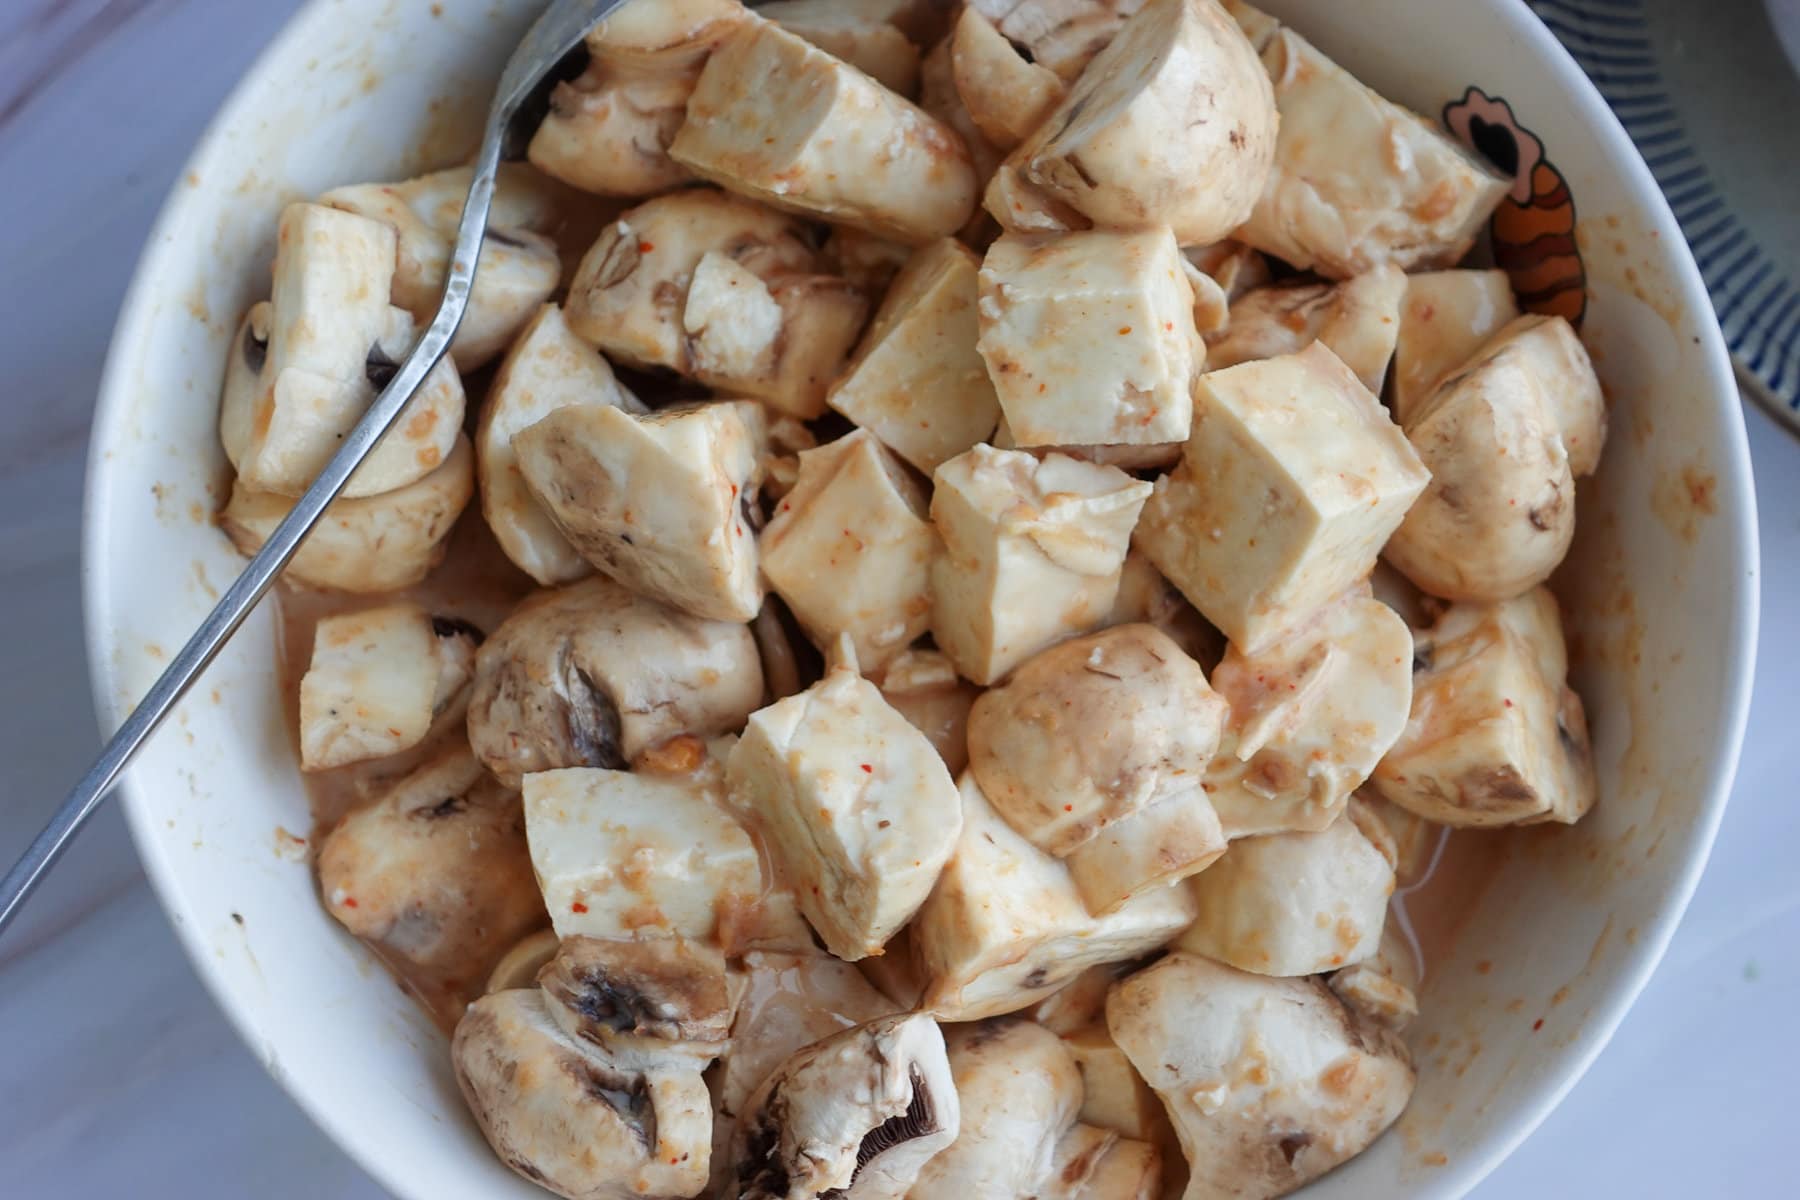 Marinate the tofu and mushrooms